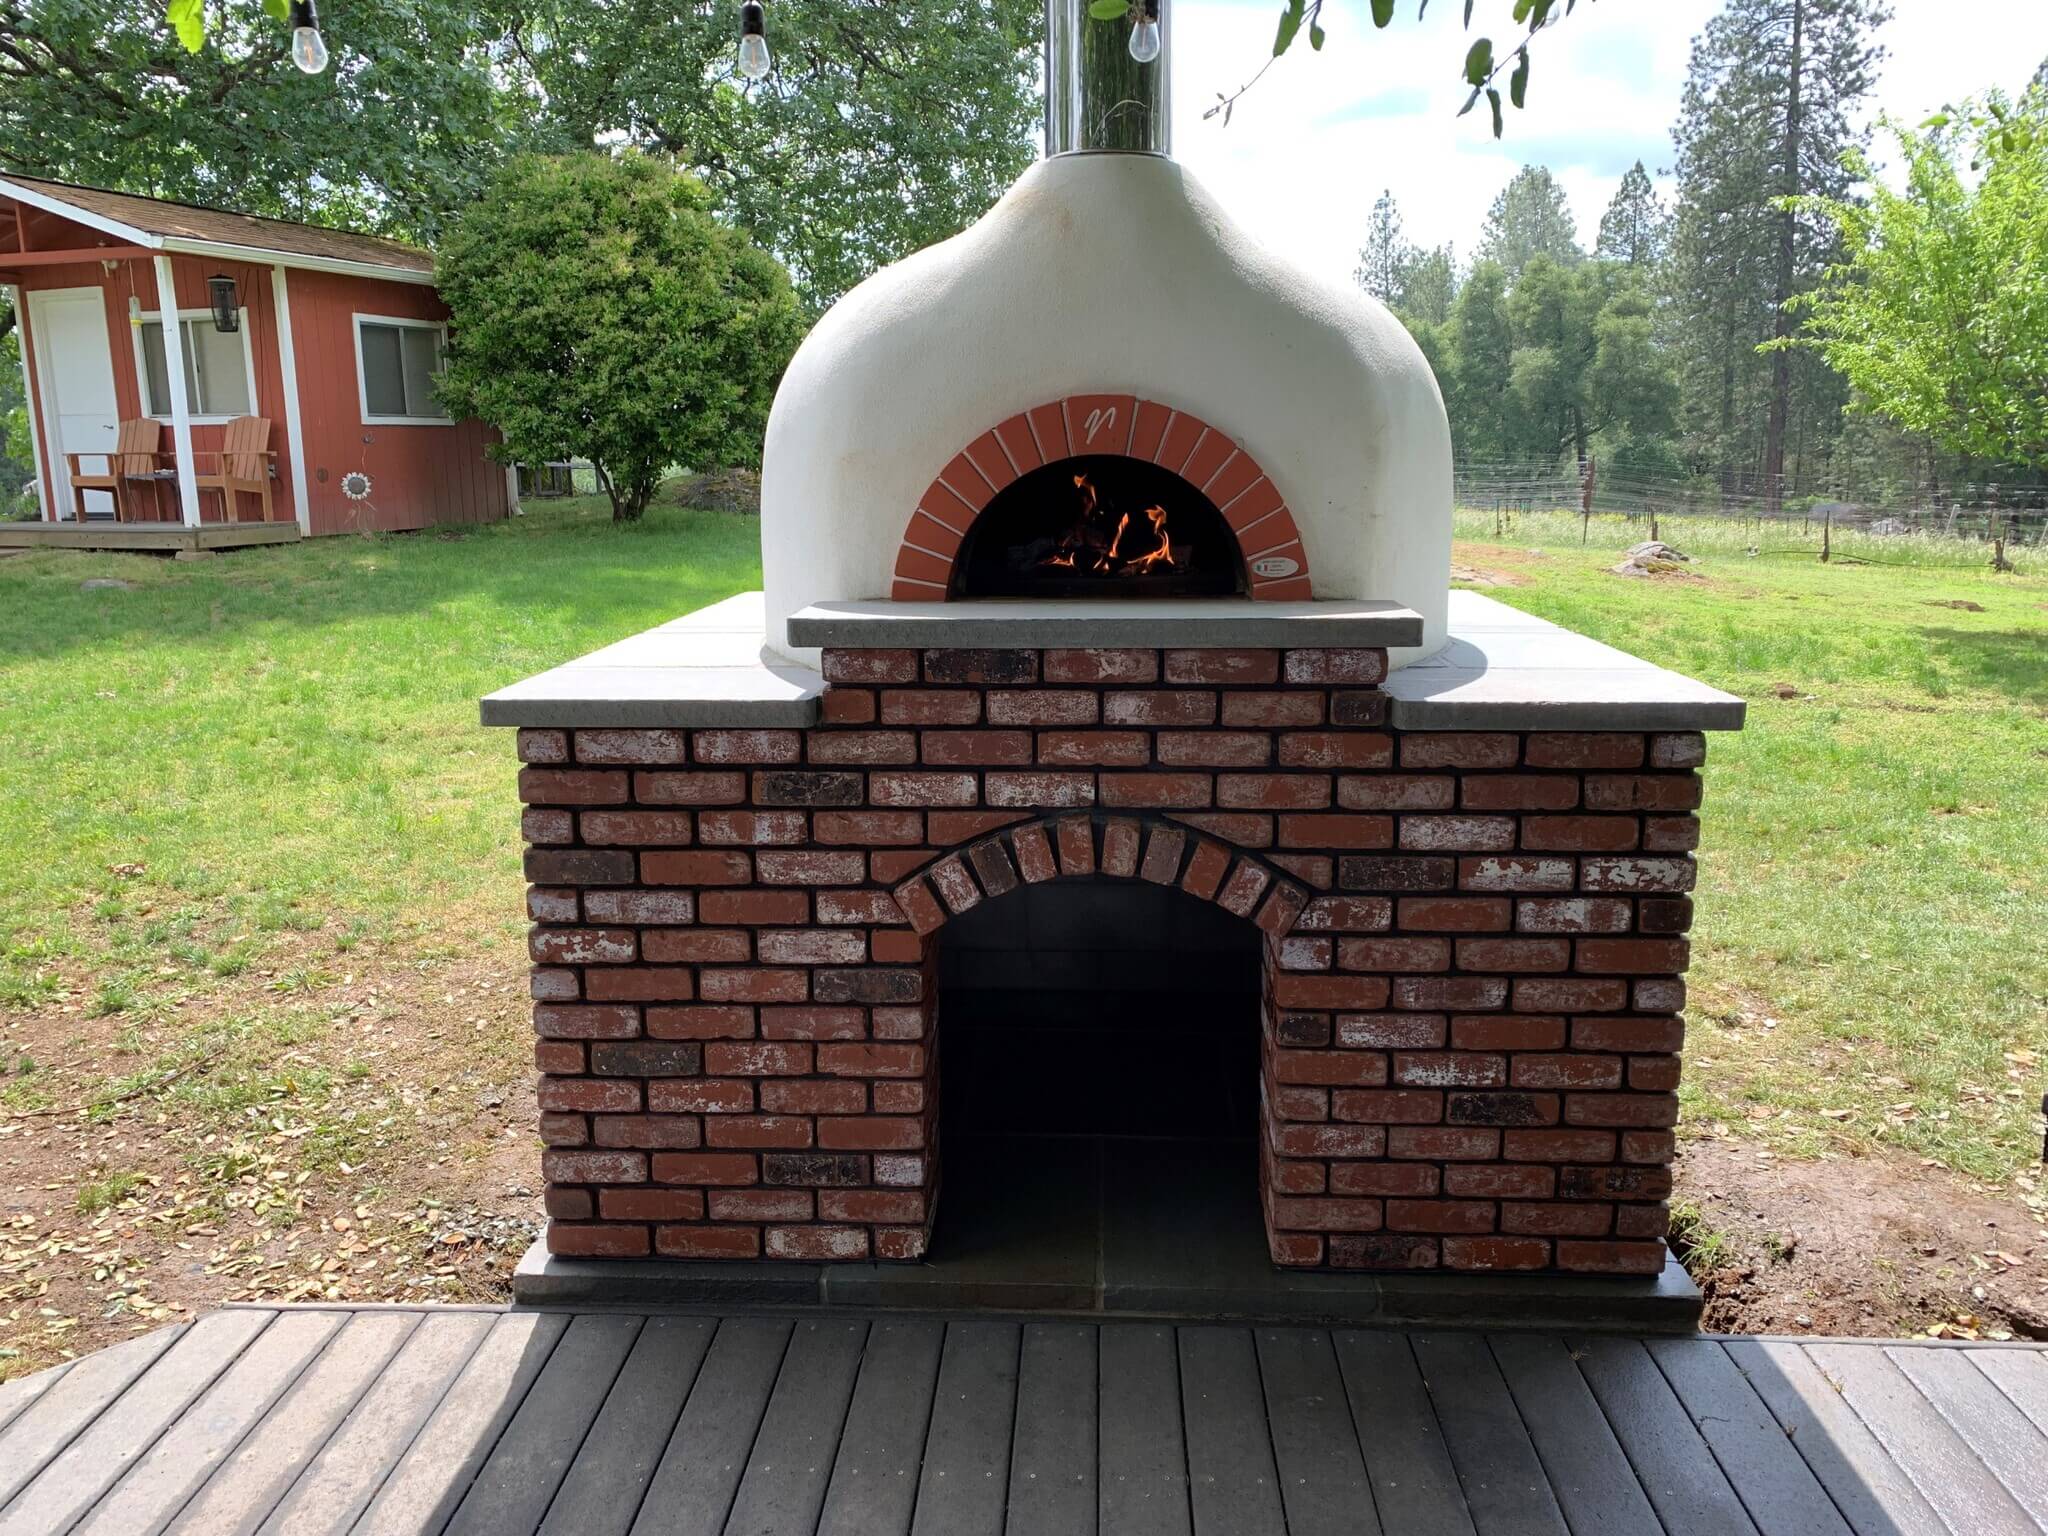 Mugnaini wood fired oven in an outdoor setting